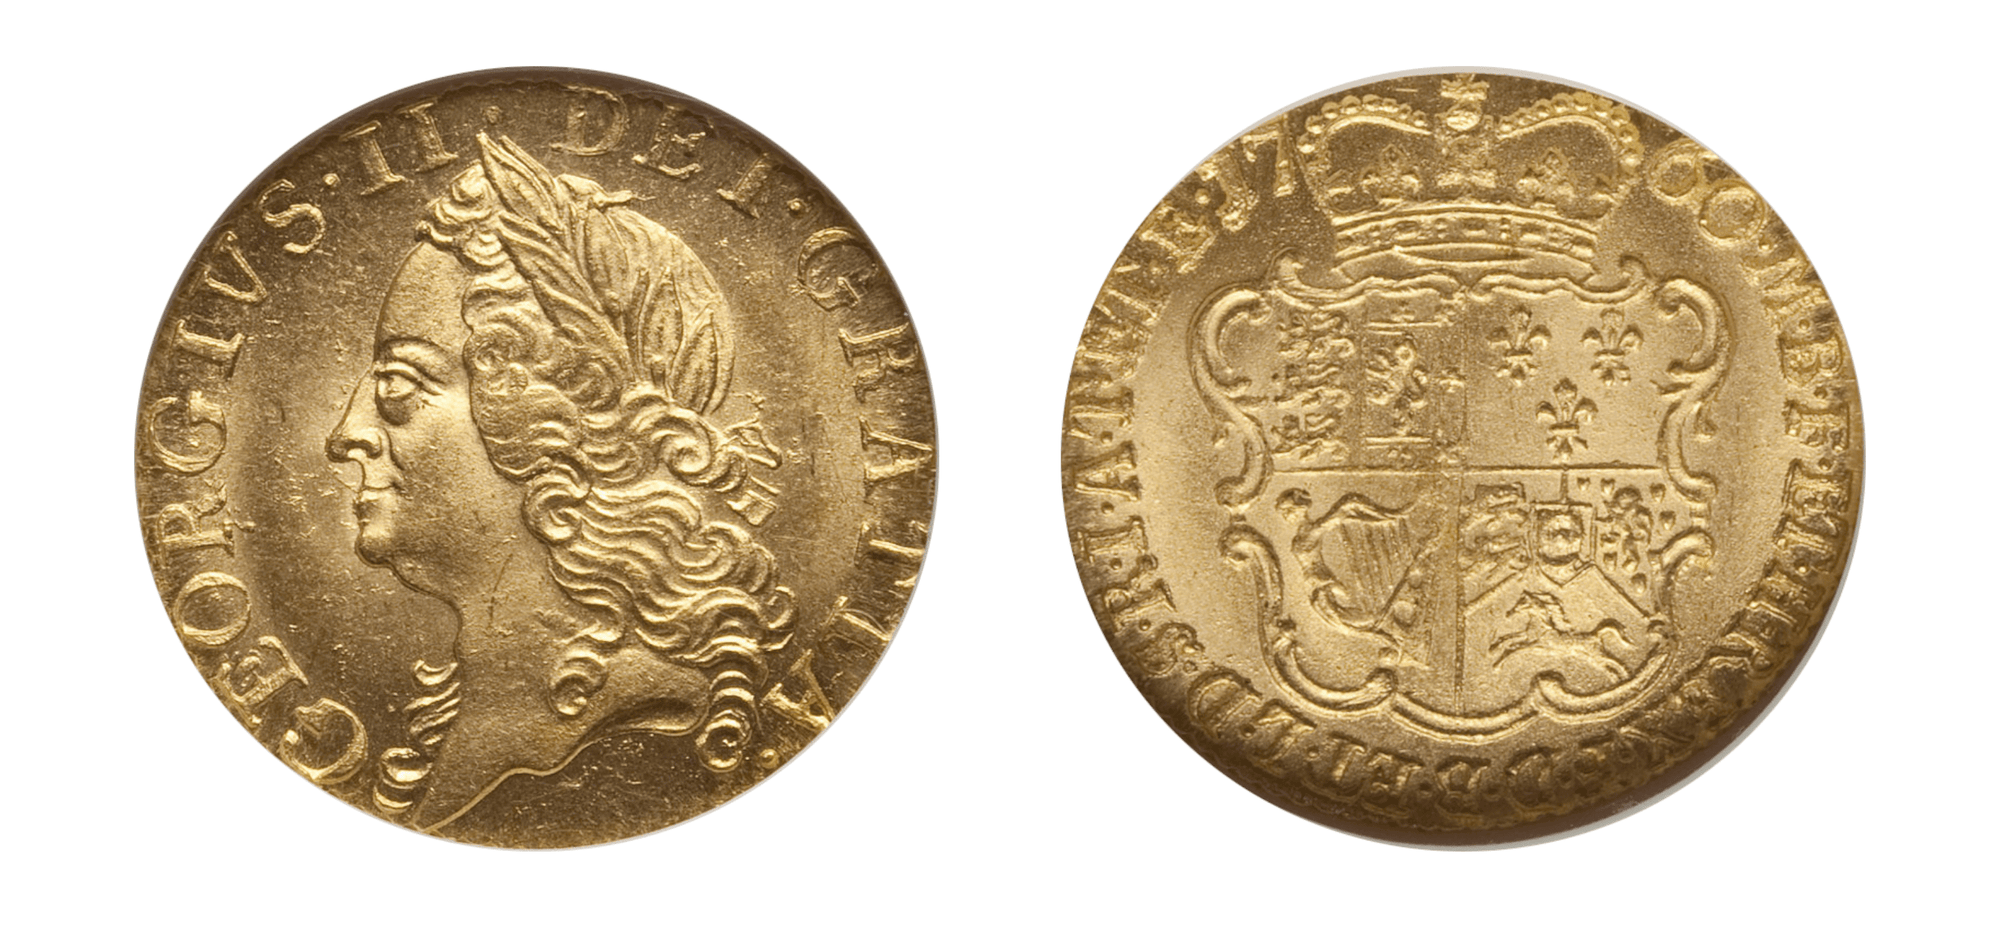 1760 George II Gold 1/2 Guinea NGC MS66 - Hard Asset Management, Inc